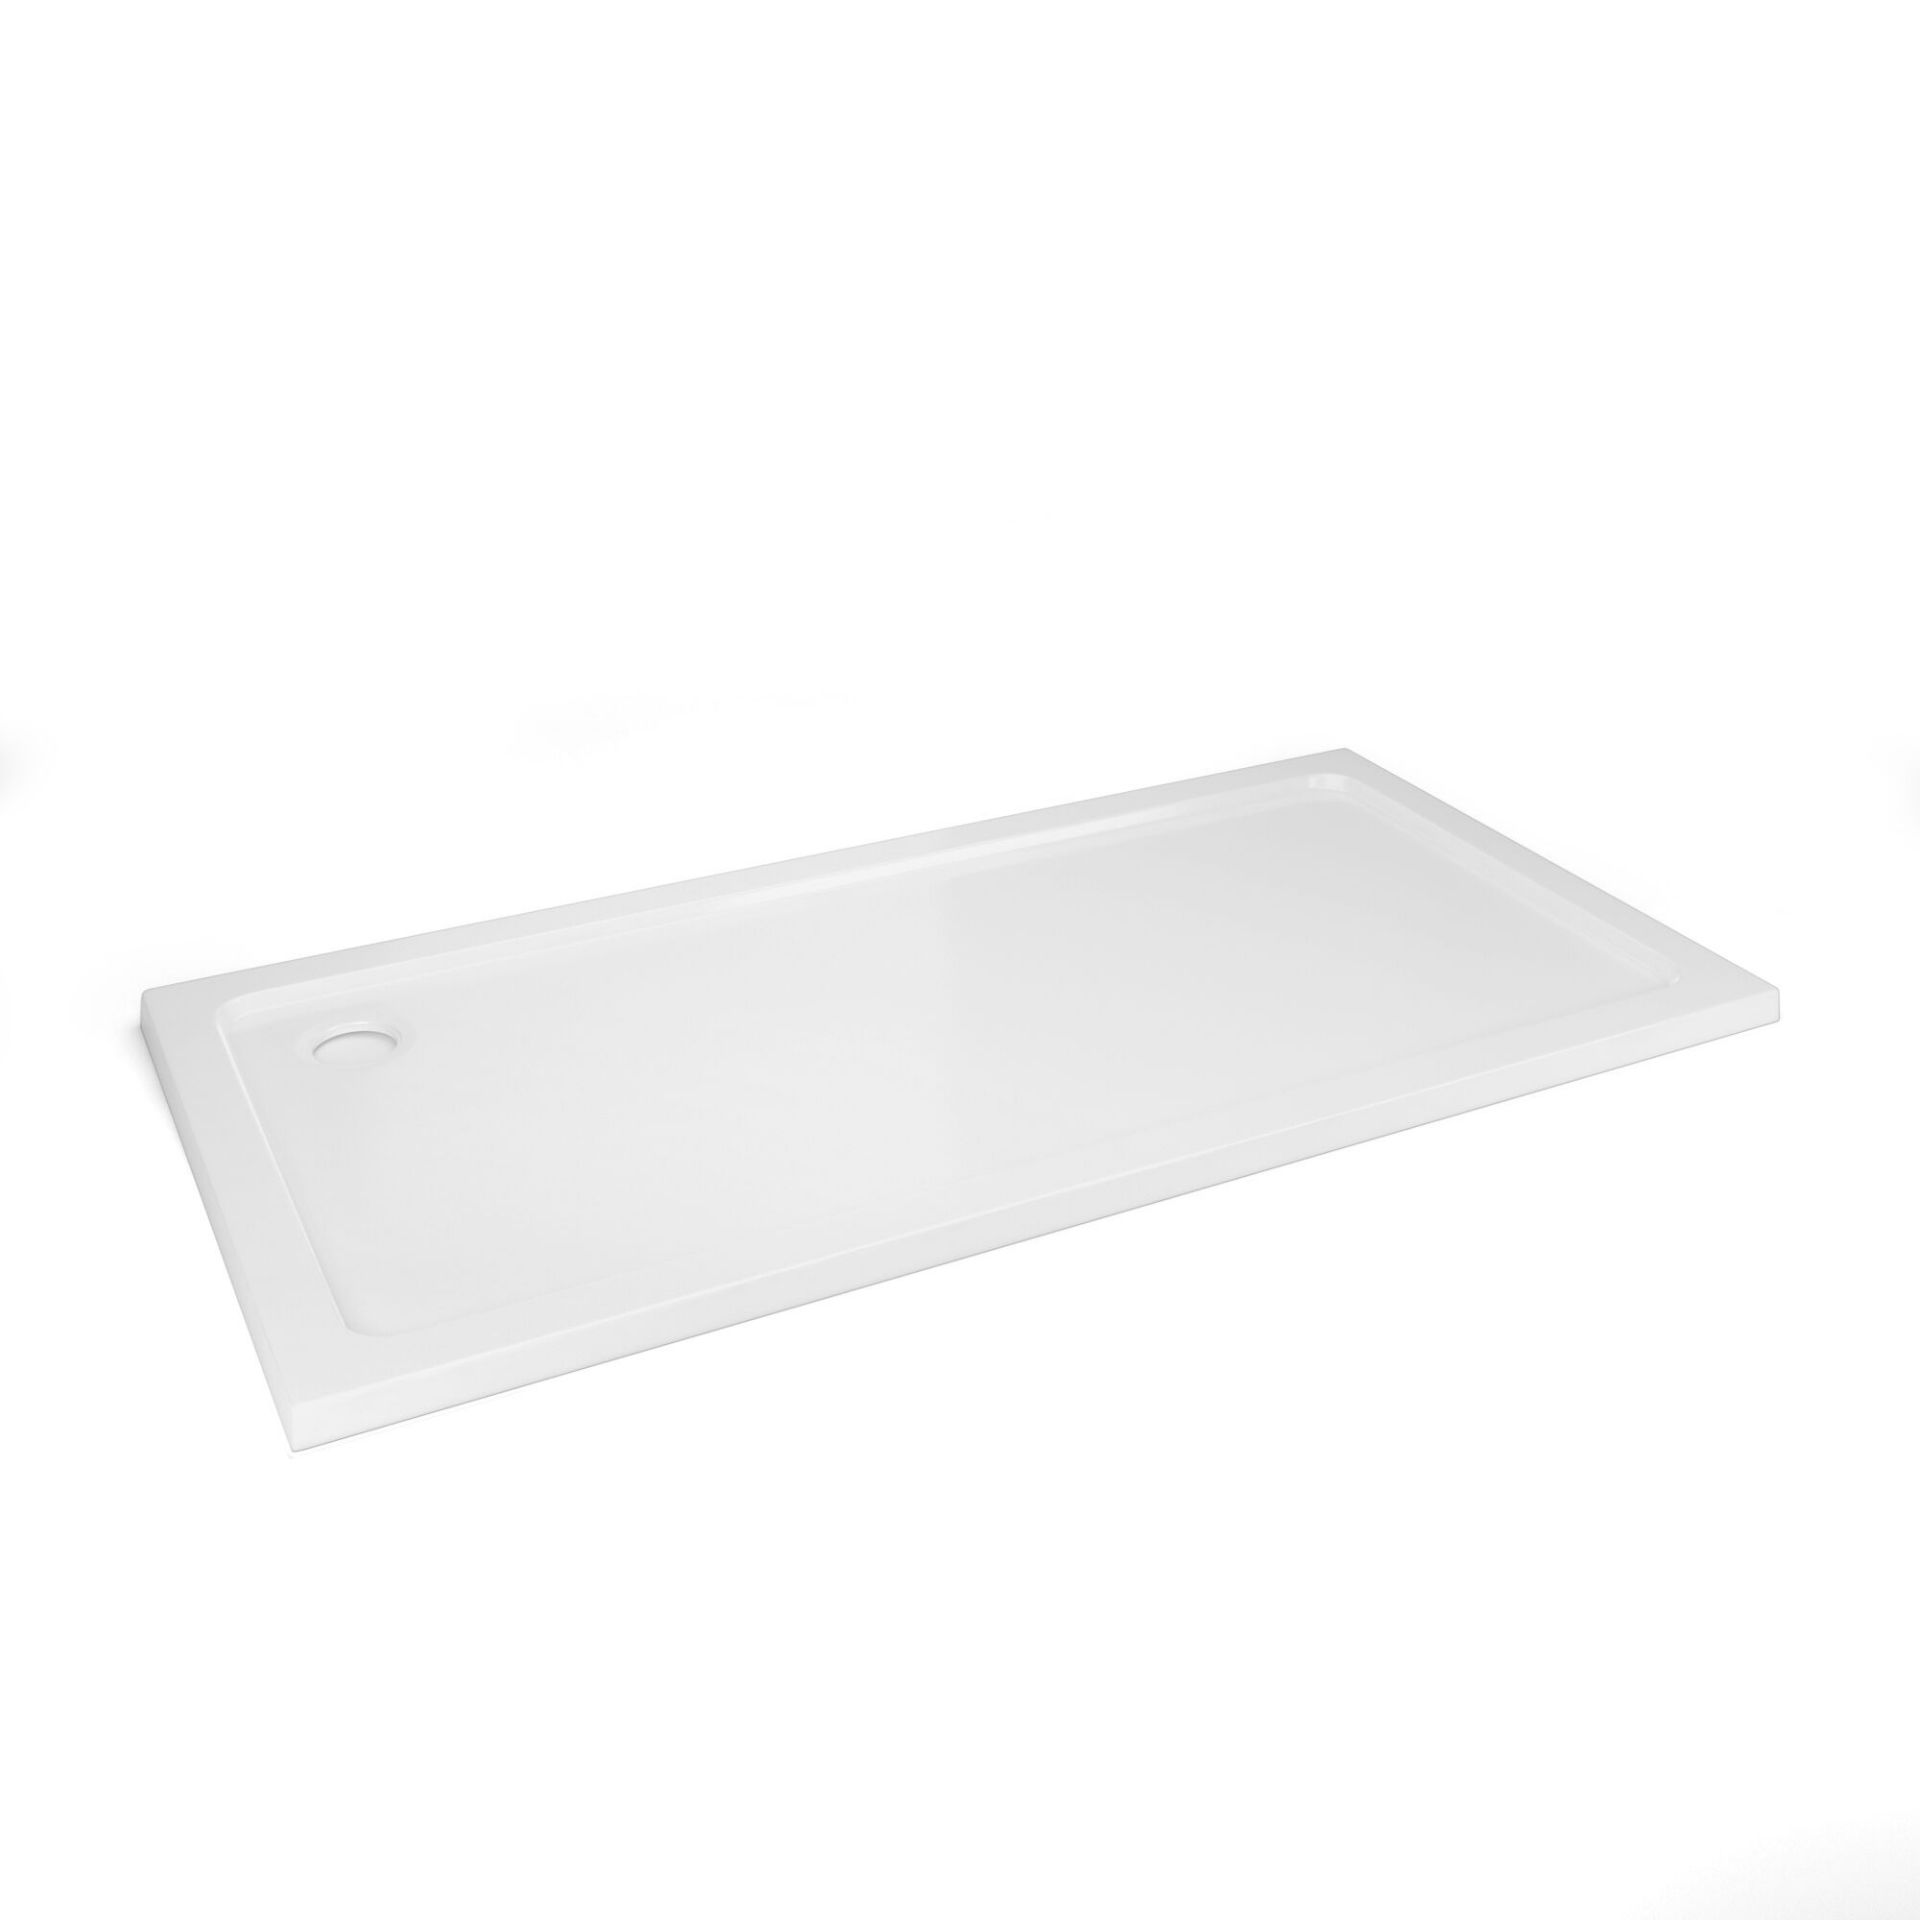 New (U6) 1600x900mm Rectangular Ultra Slim Stone Shower Tray. Rrp £469.99.Low Profile Ultra S... - Image 2 of 2